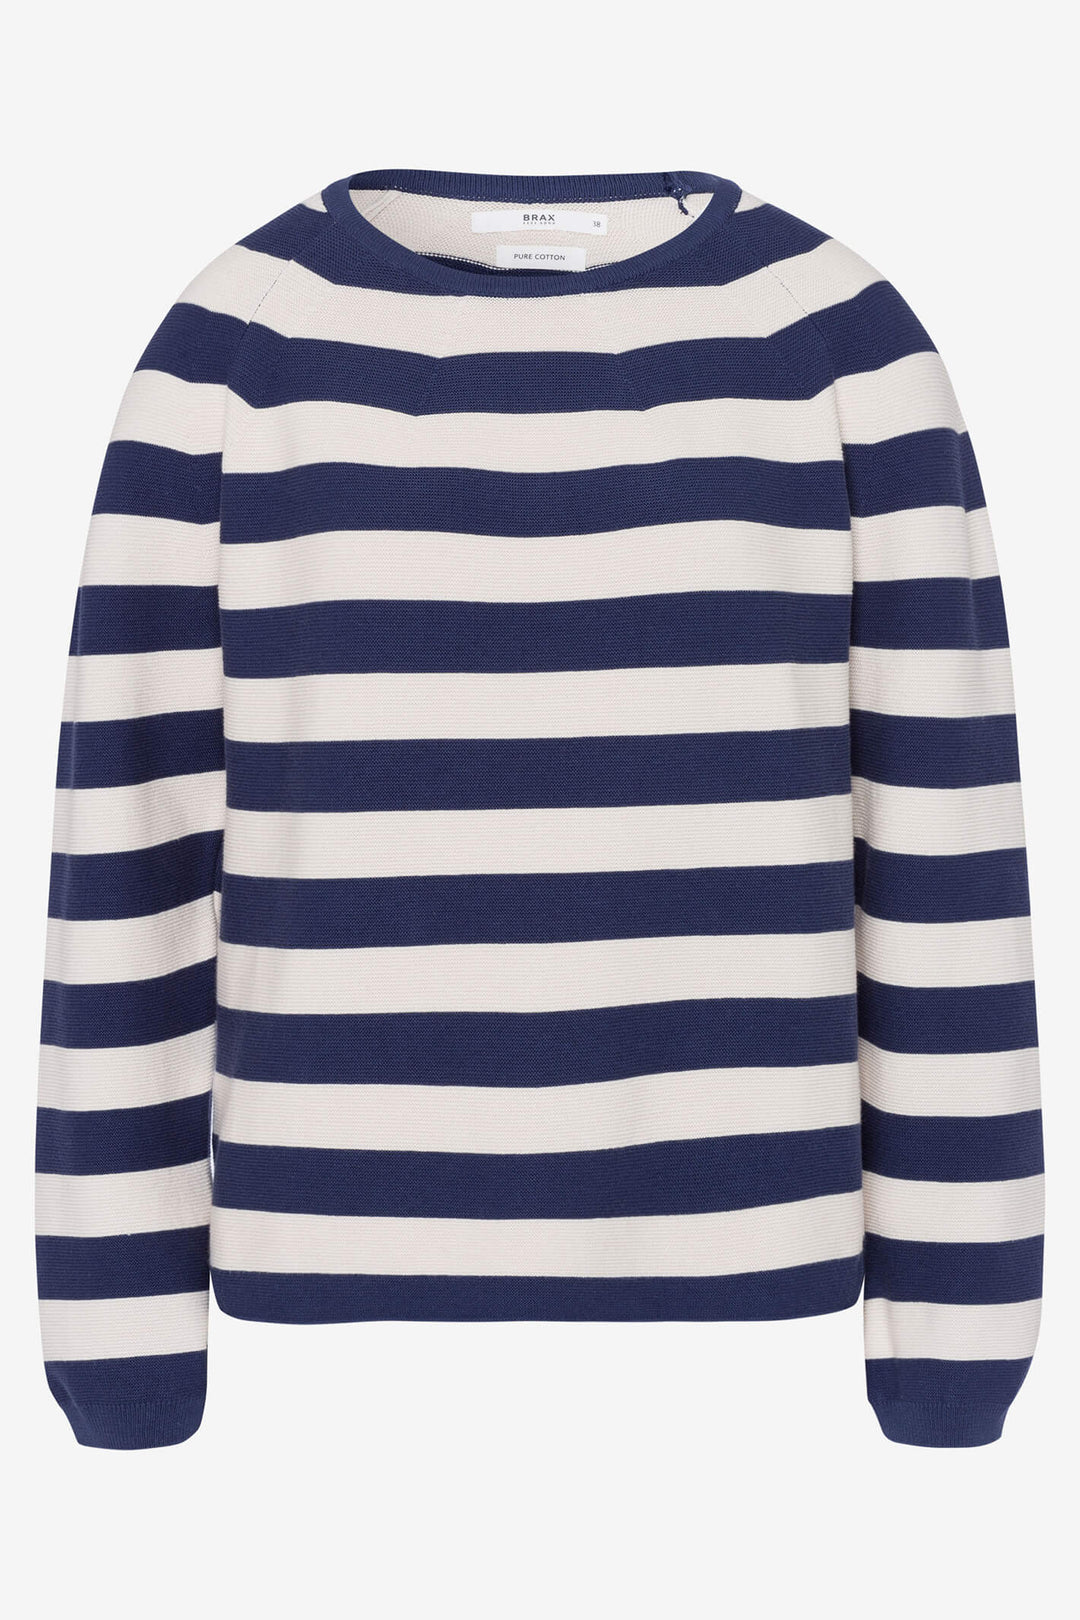 Brax 32-4018 23 Lesley Indigo Blue Stripe Long Sleeve Cotton Jumper - Shirley Allum Boutique